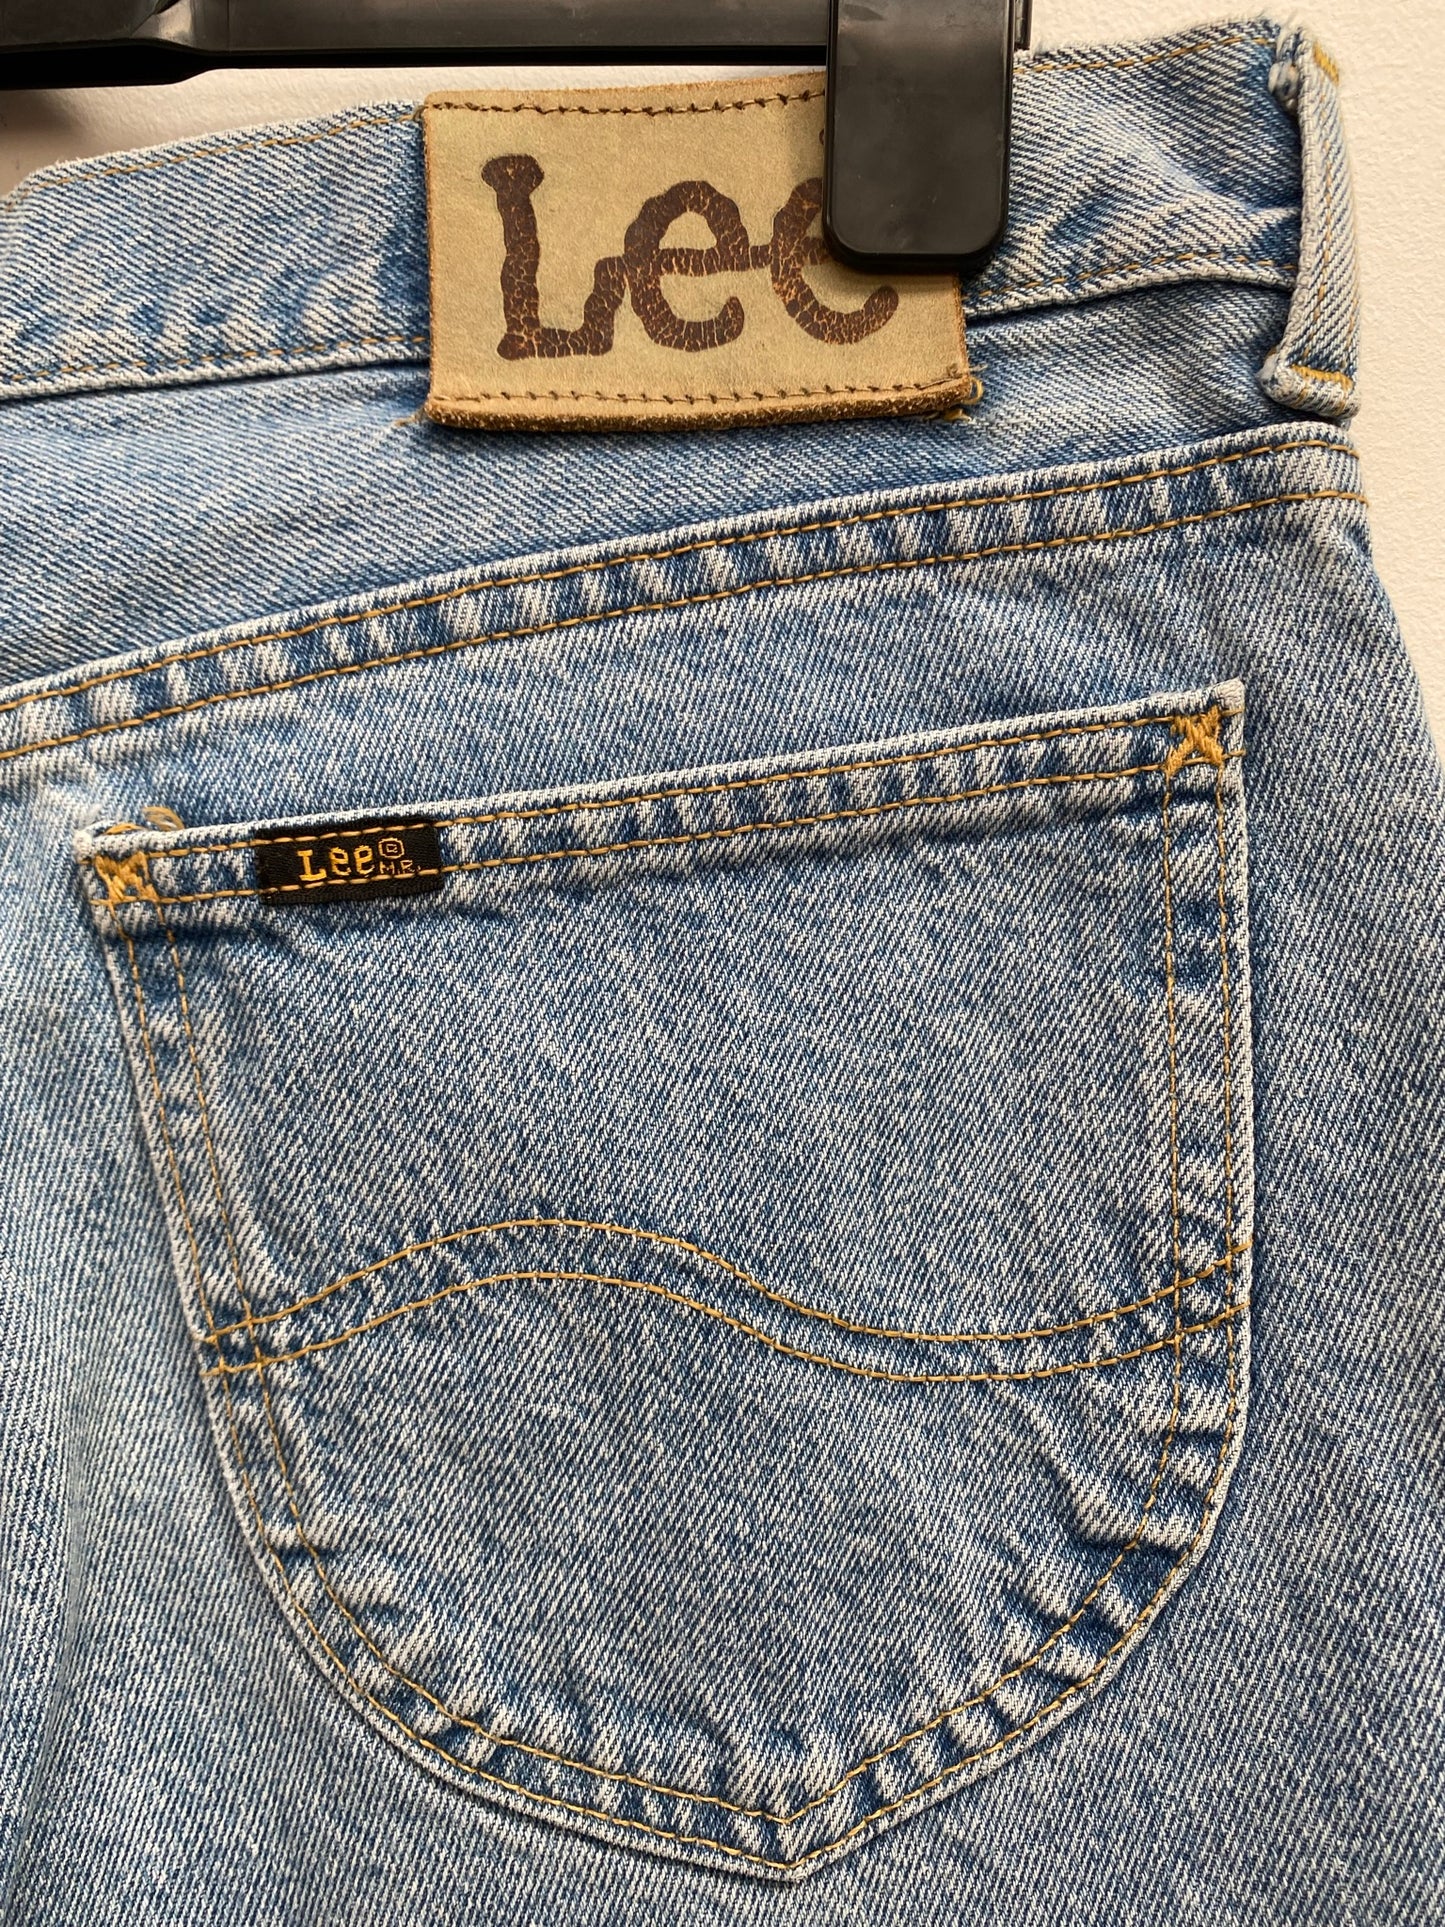 70s Denim Flared Lee Jeans Size 34-34 - Ex Hire Fancy Dress Costume